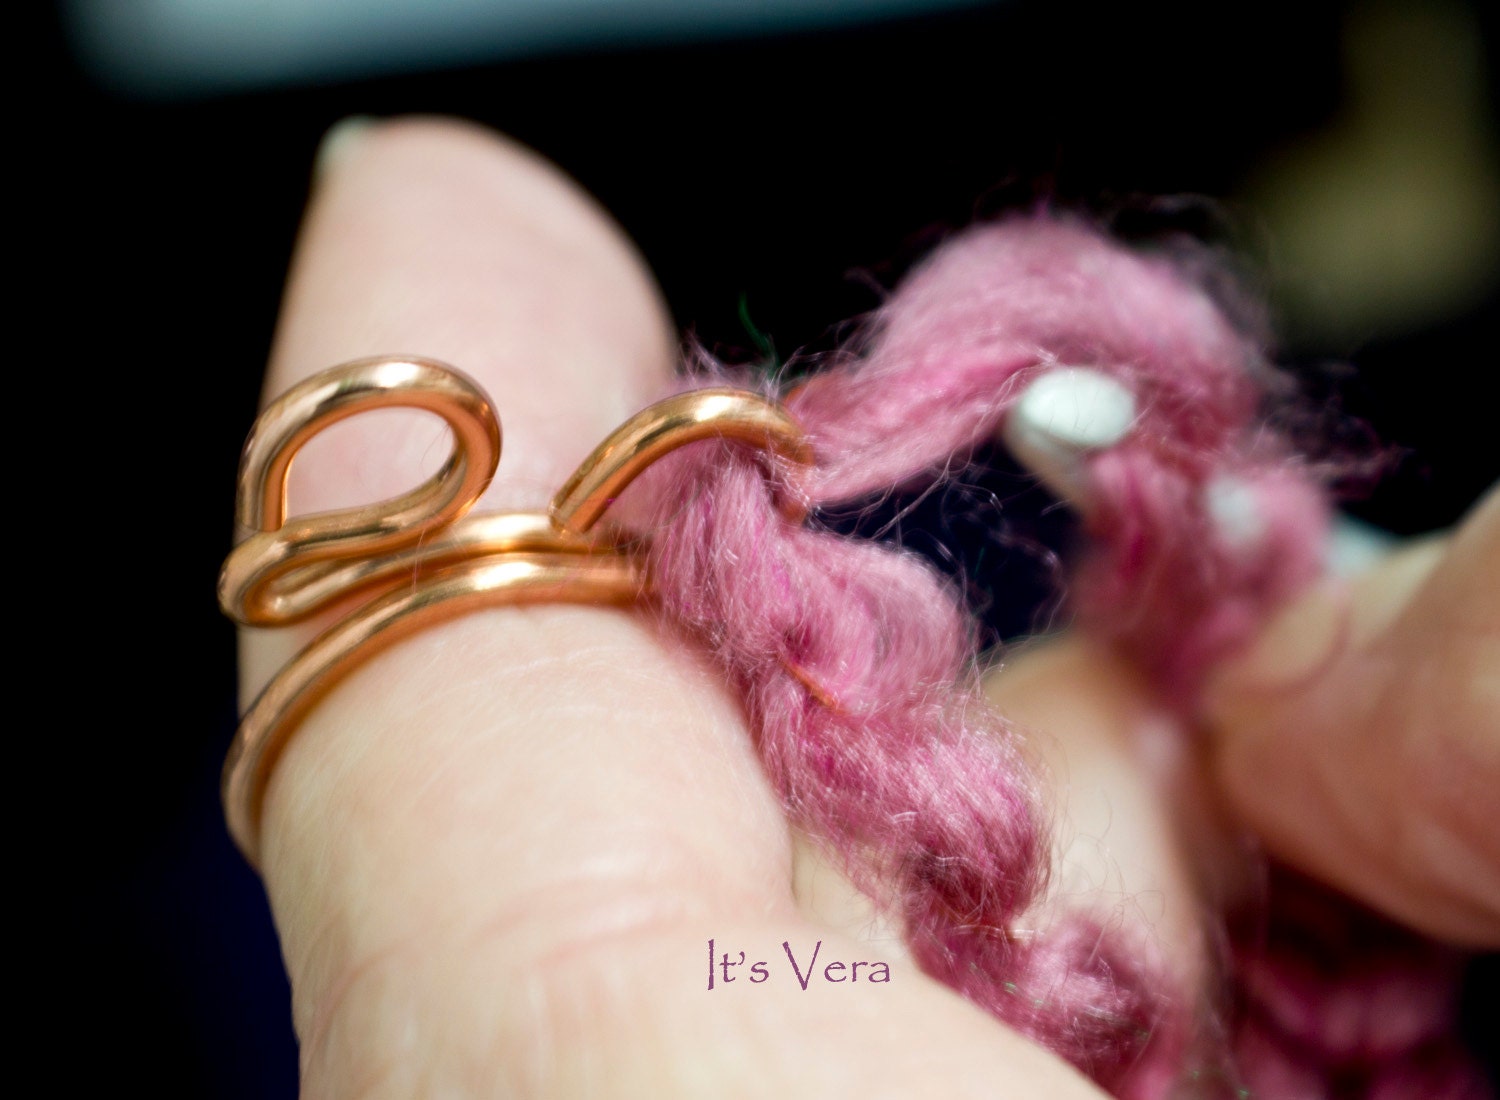 Spiral Knit Pin, Stitch Keeper, Arthritis Ring, Crochet Gift